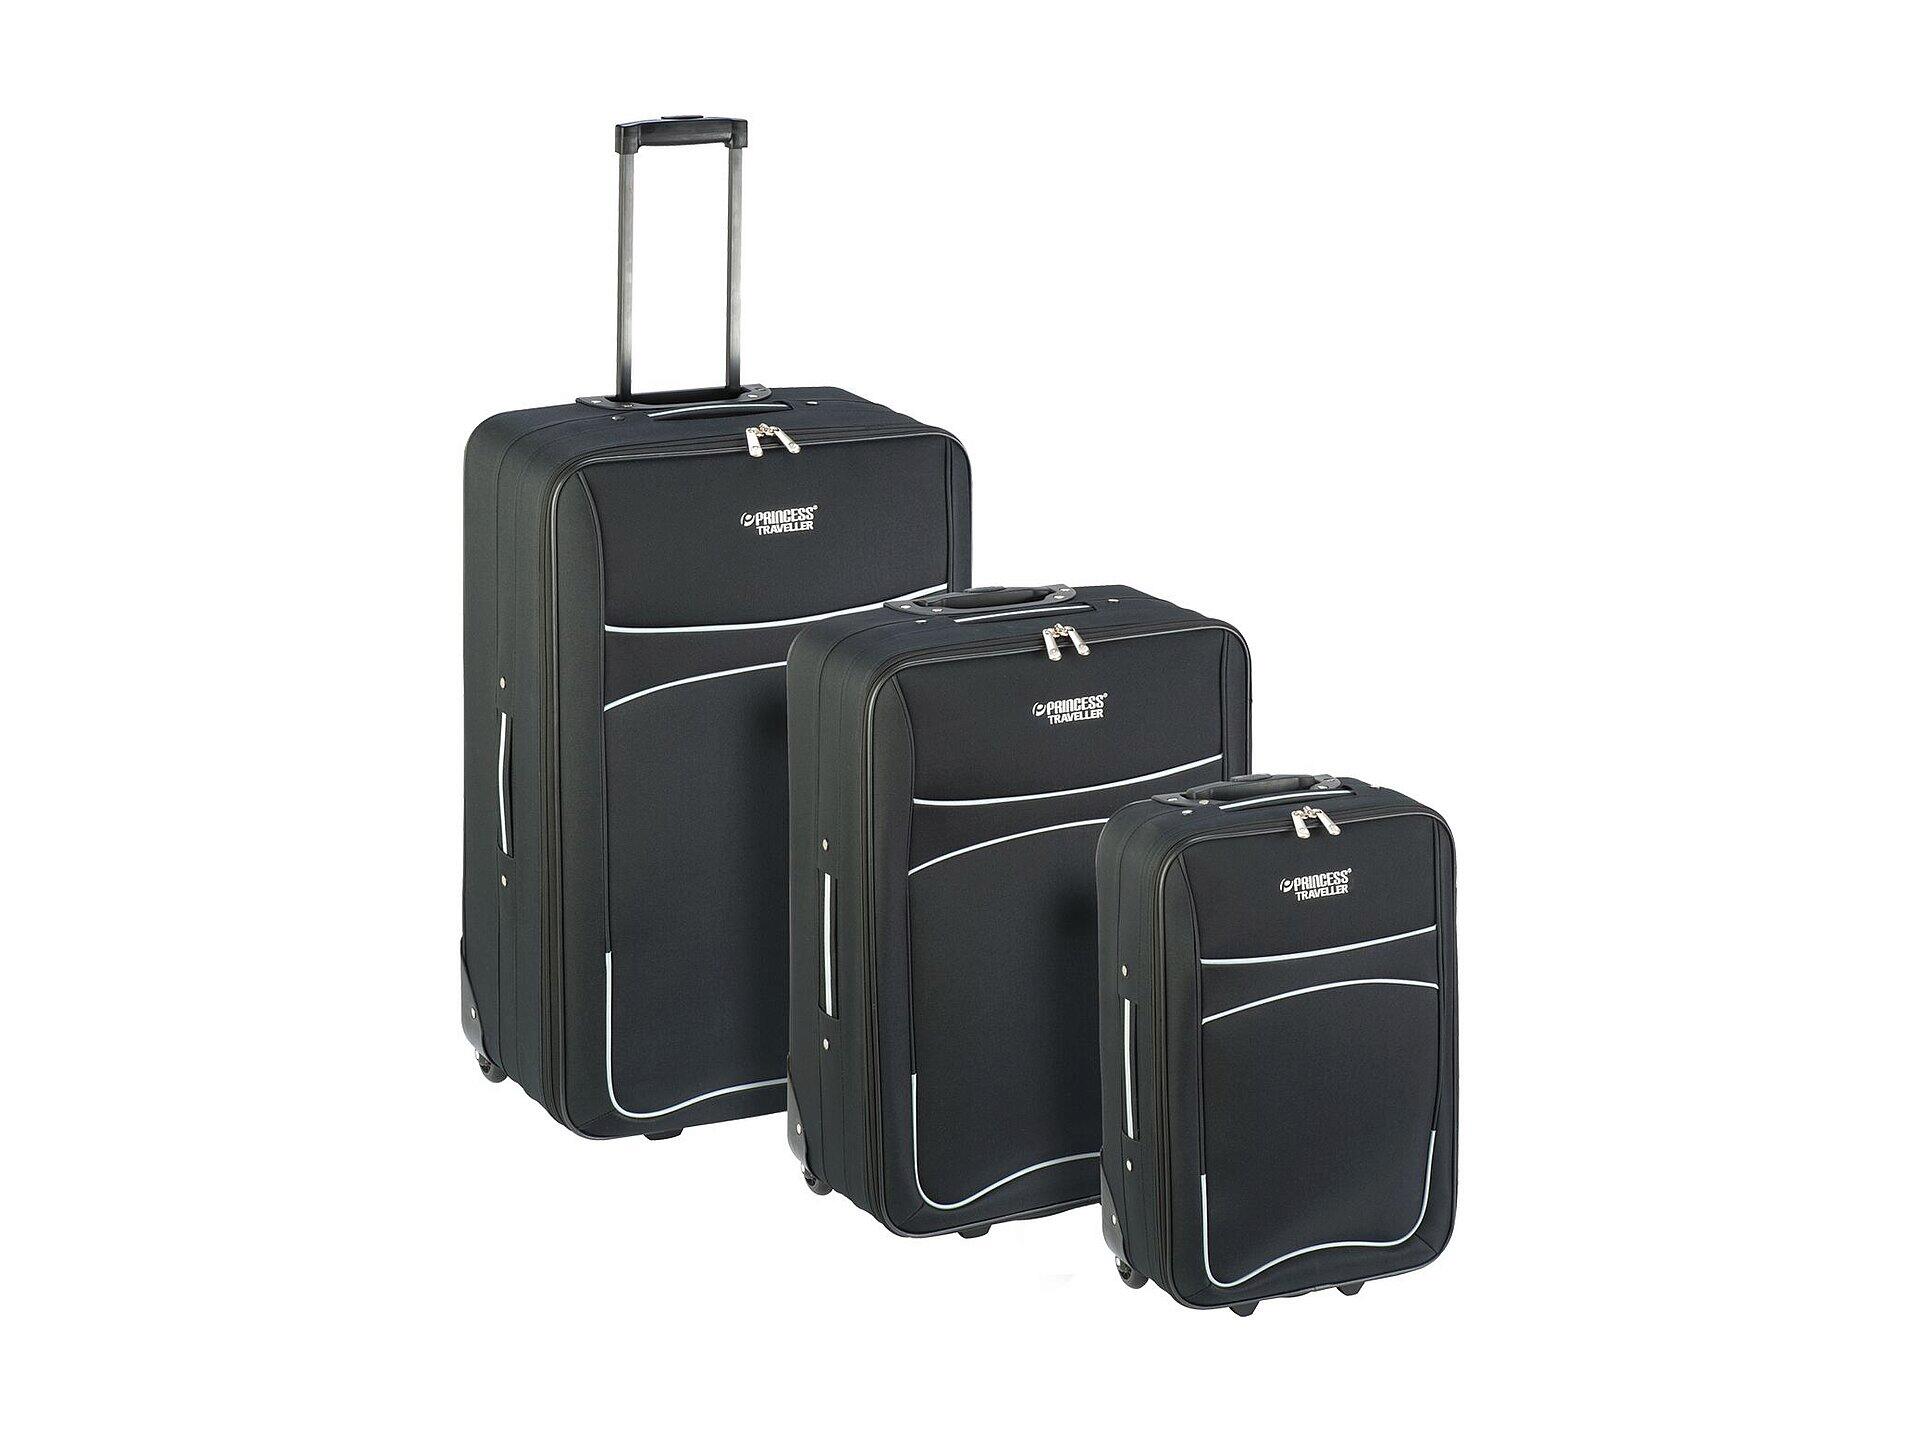 Traveller Harlow valises small/medium/large set de 3